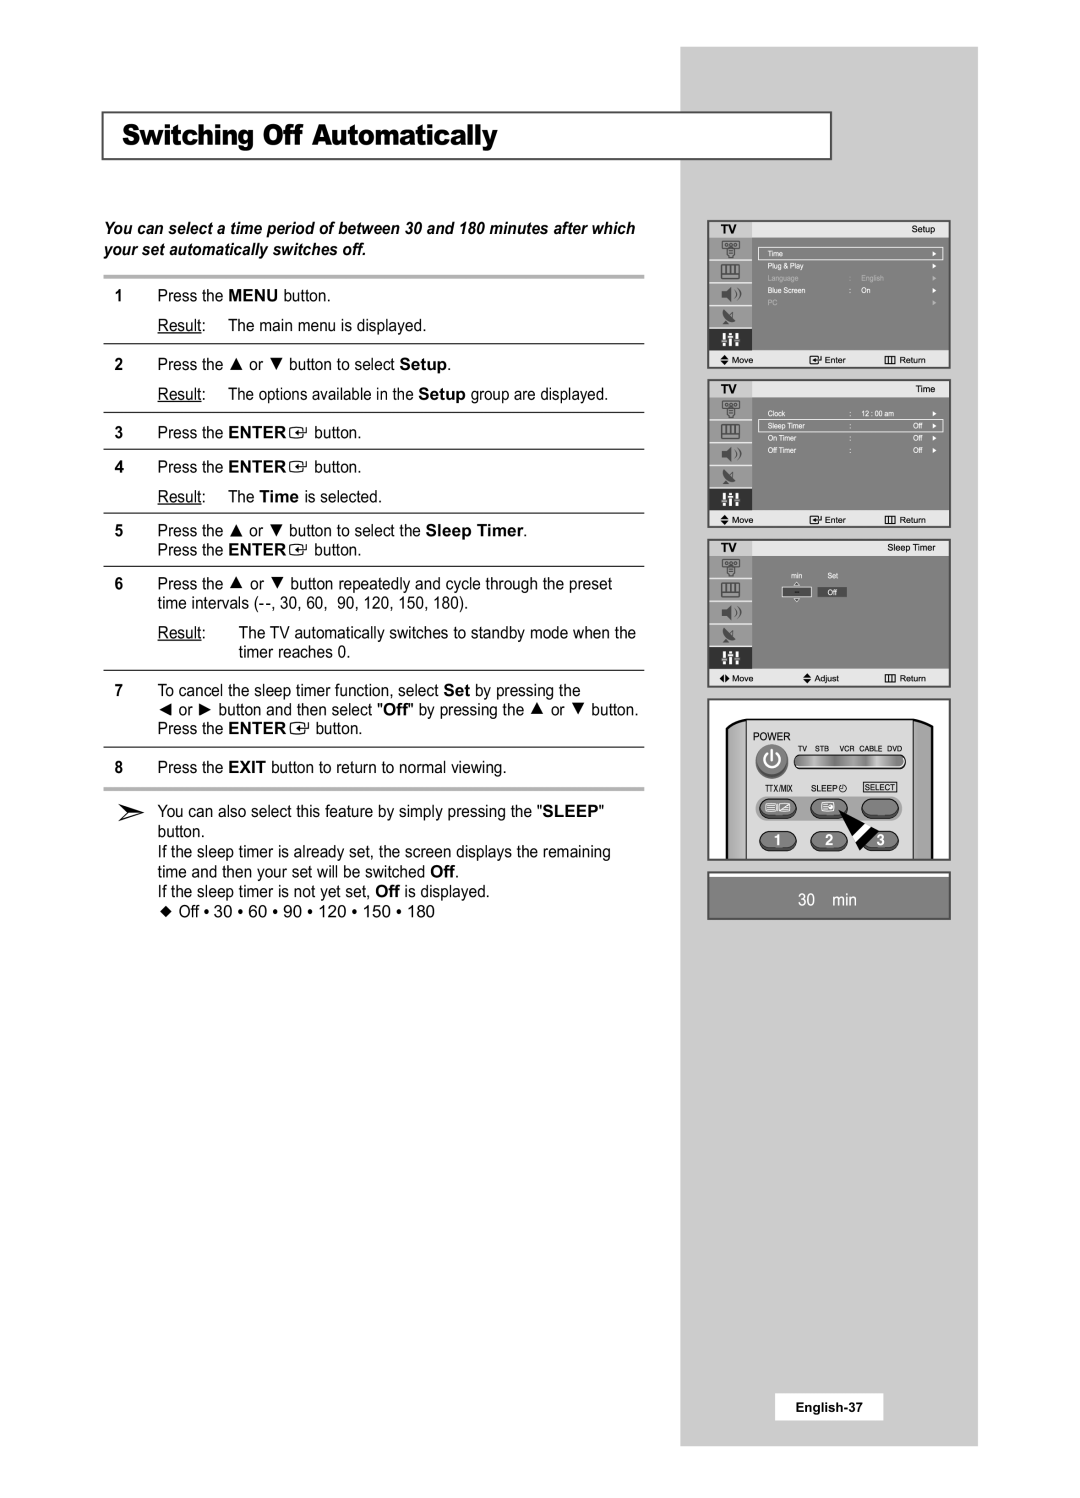 Samsung LA22N21B manual Switching Off Automatically, English-37 